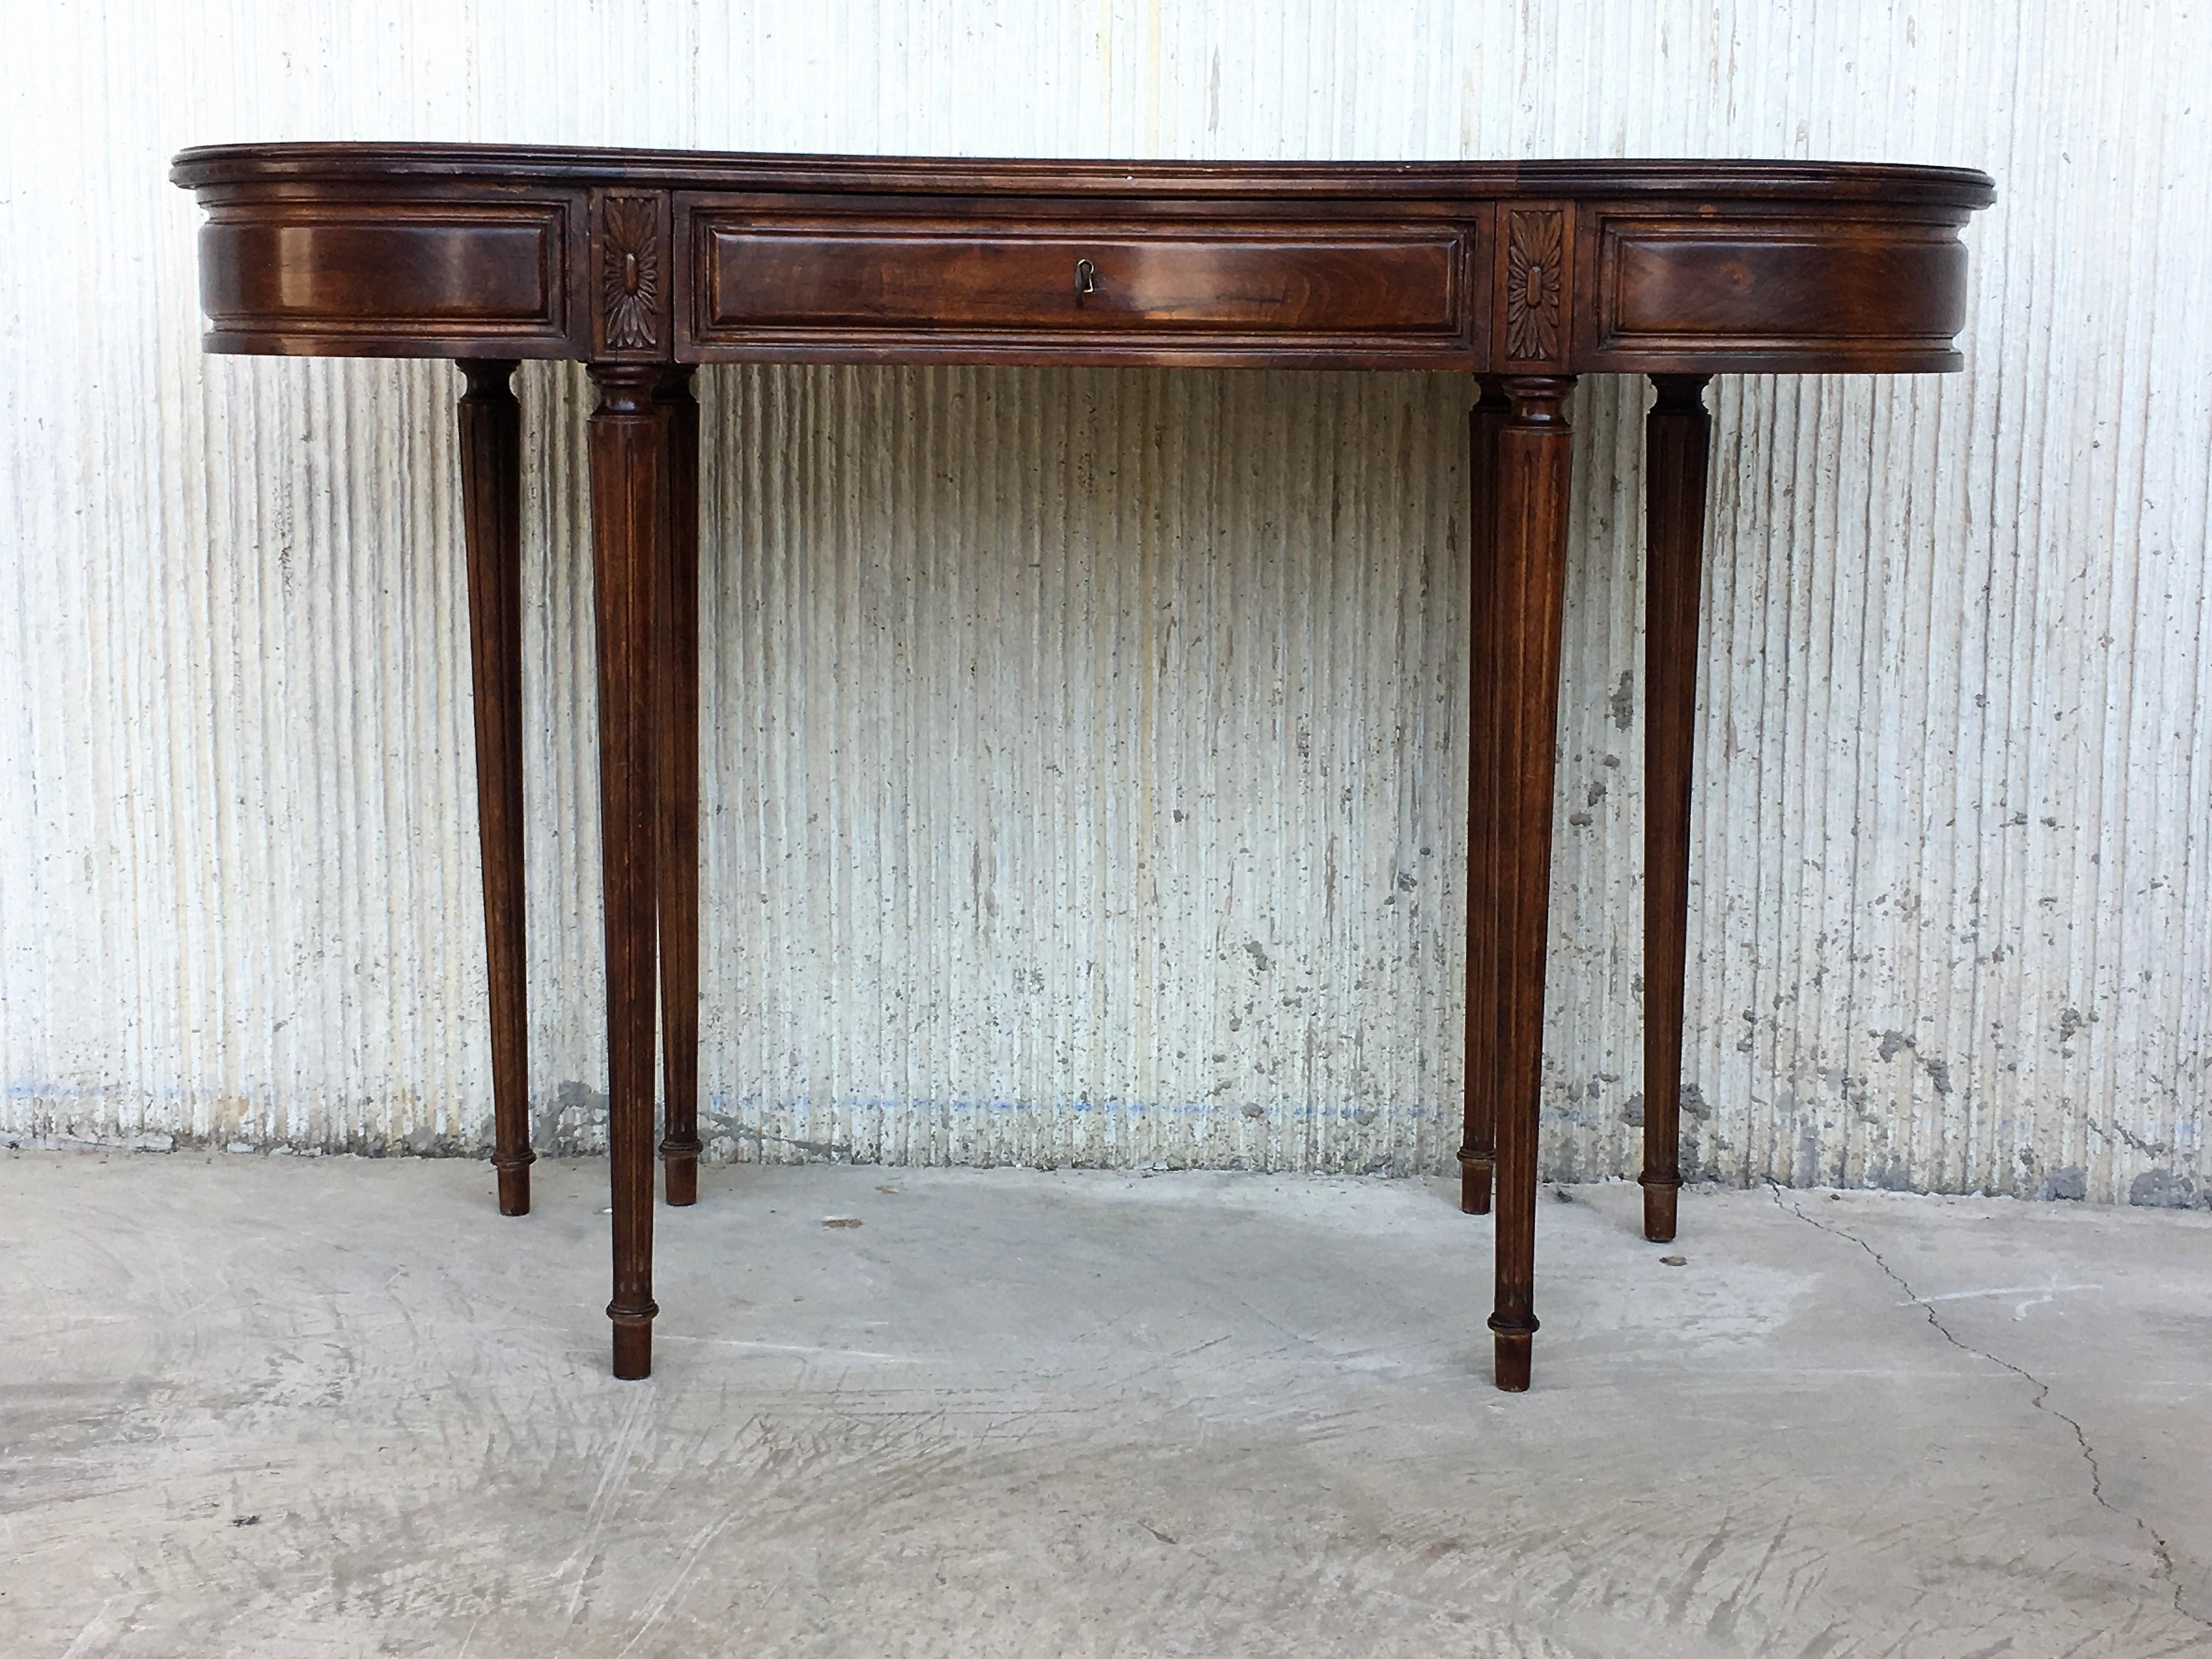 Walnut Fine Quality Coromandel and Marquetry Inlaid Victorian Period Kidney Lady Desk